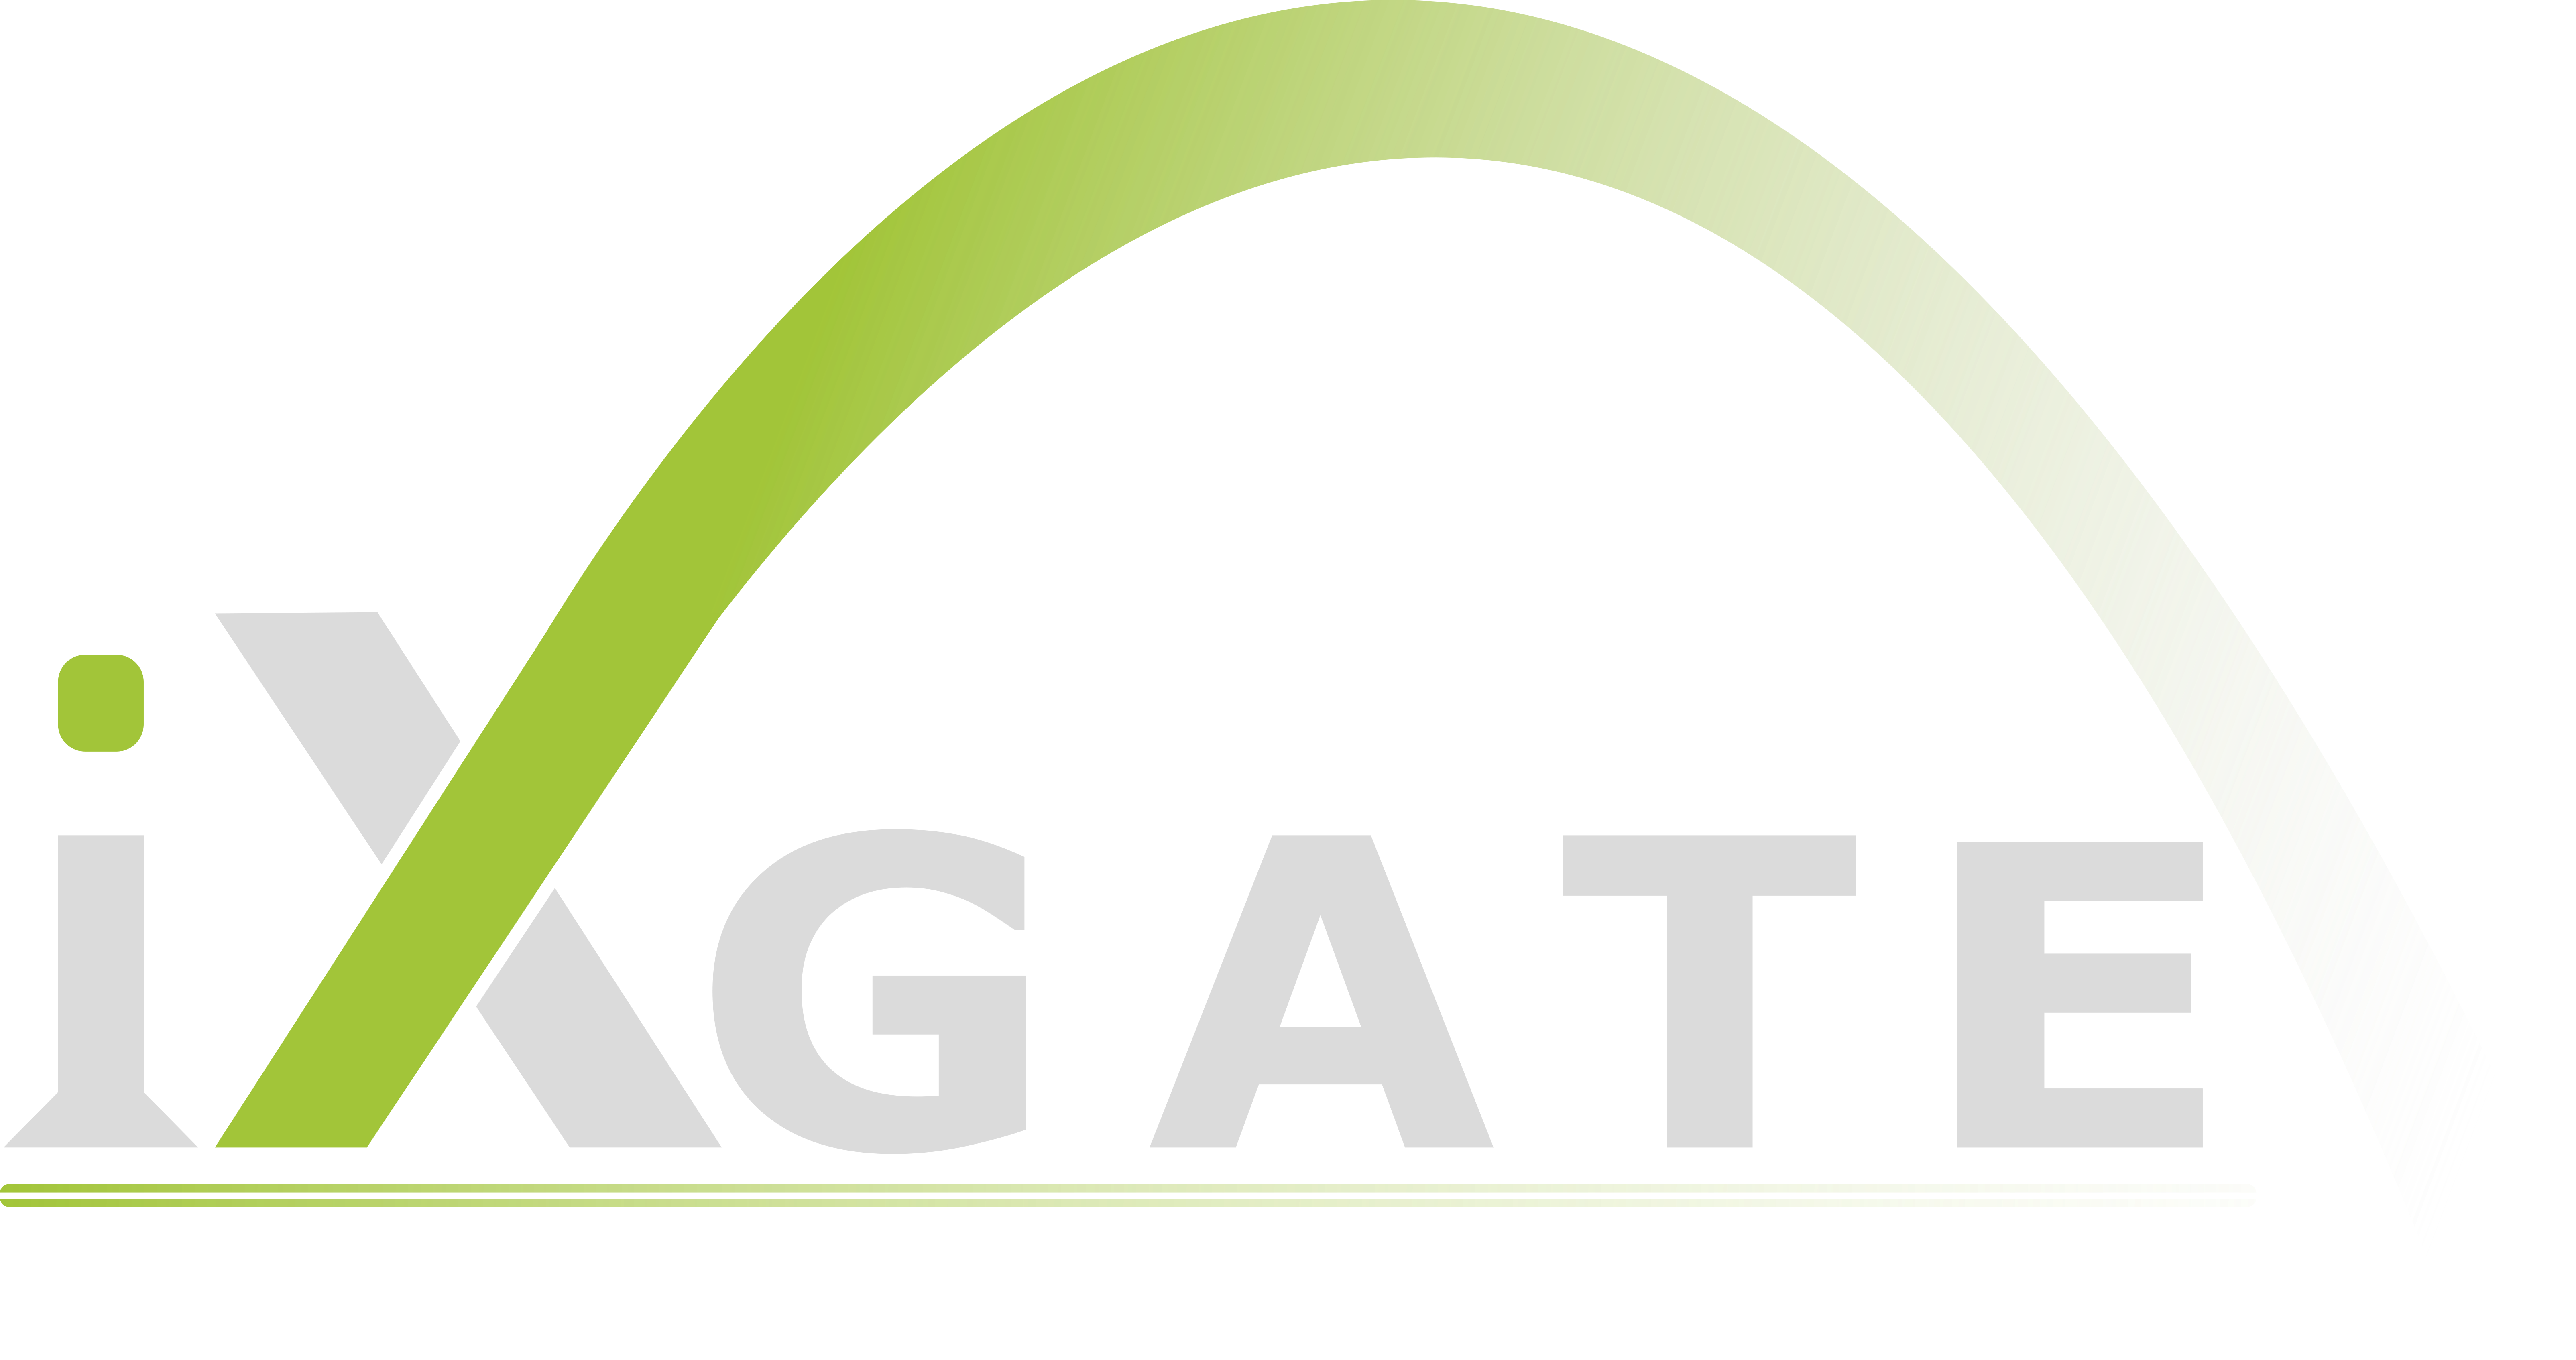 iXGate-DATA